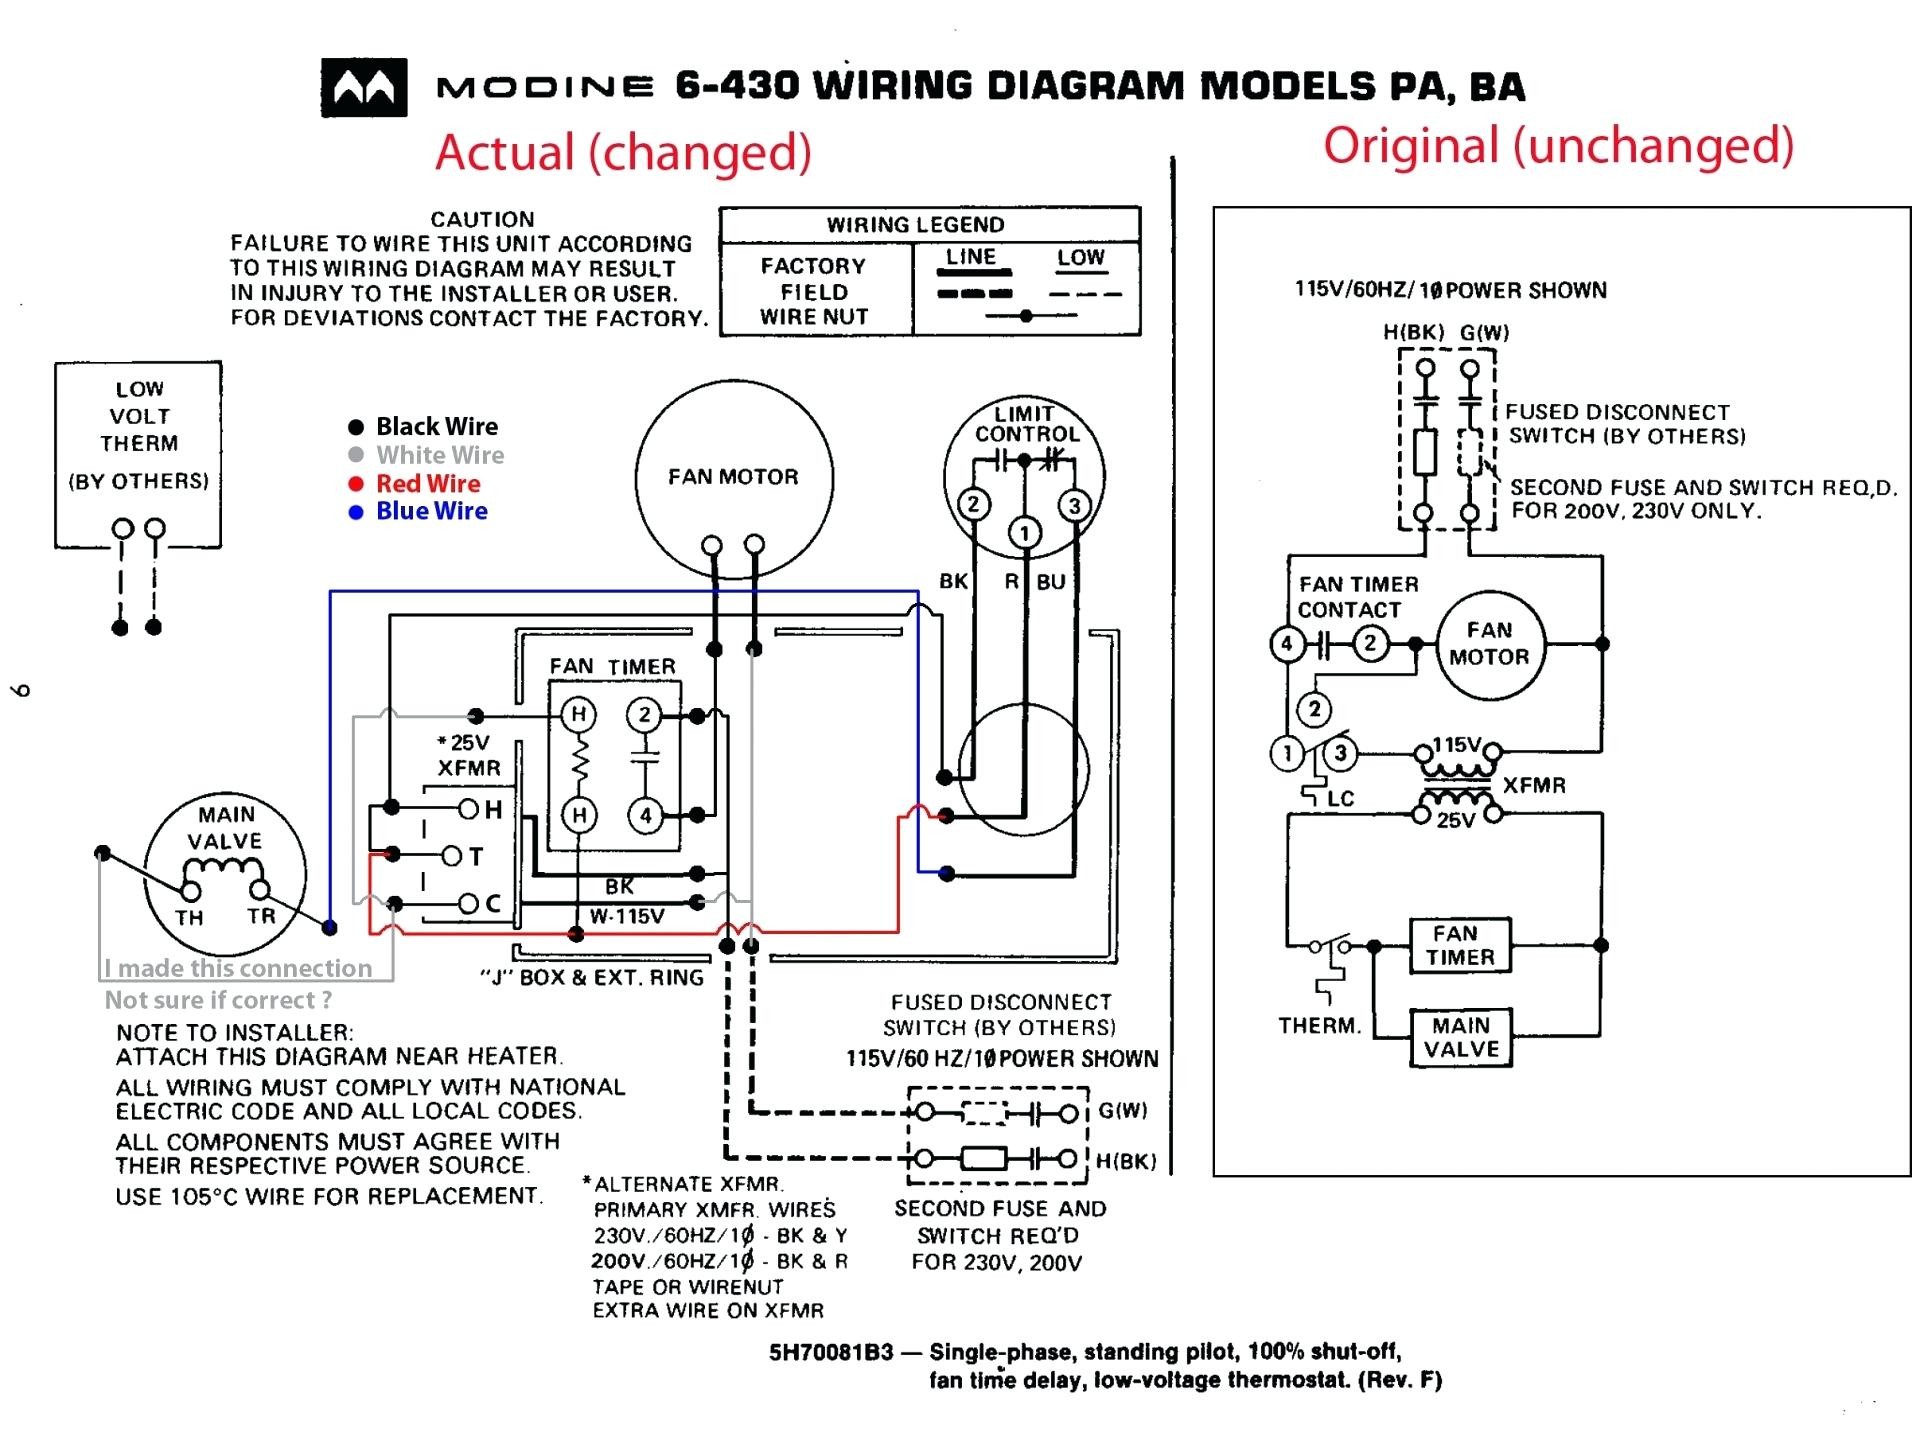 Hvac Fan Relay Wiring Diagram Hvac Blower Motor Wiring Diagram Carrier Furnace Diagrams 2 Wire Of Hvac Fan Relay Wiring Diagram